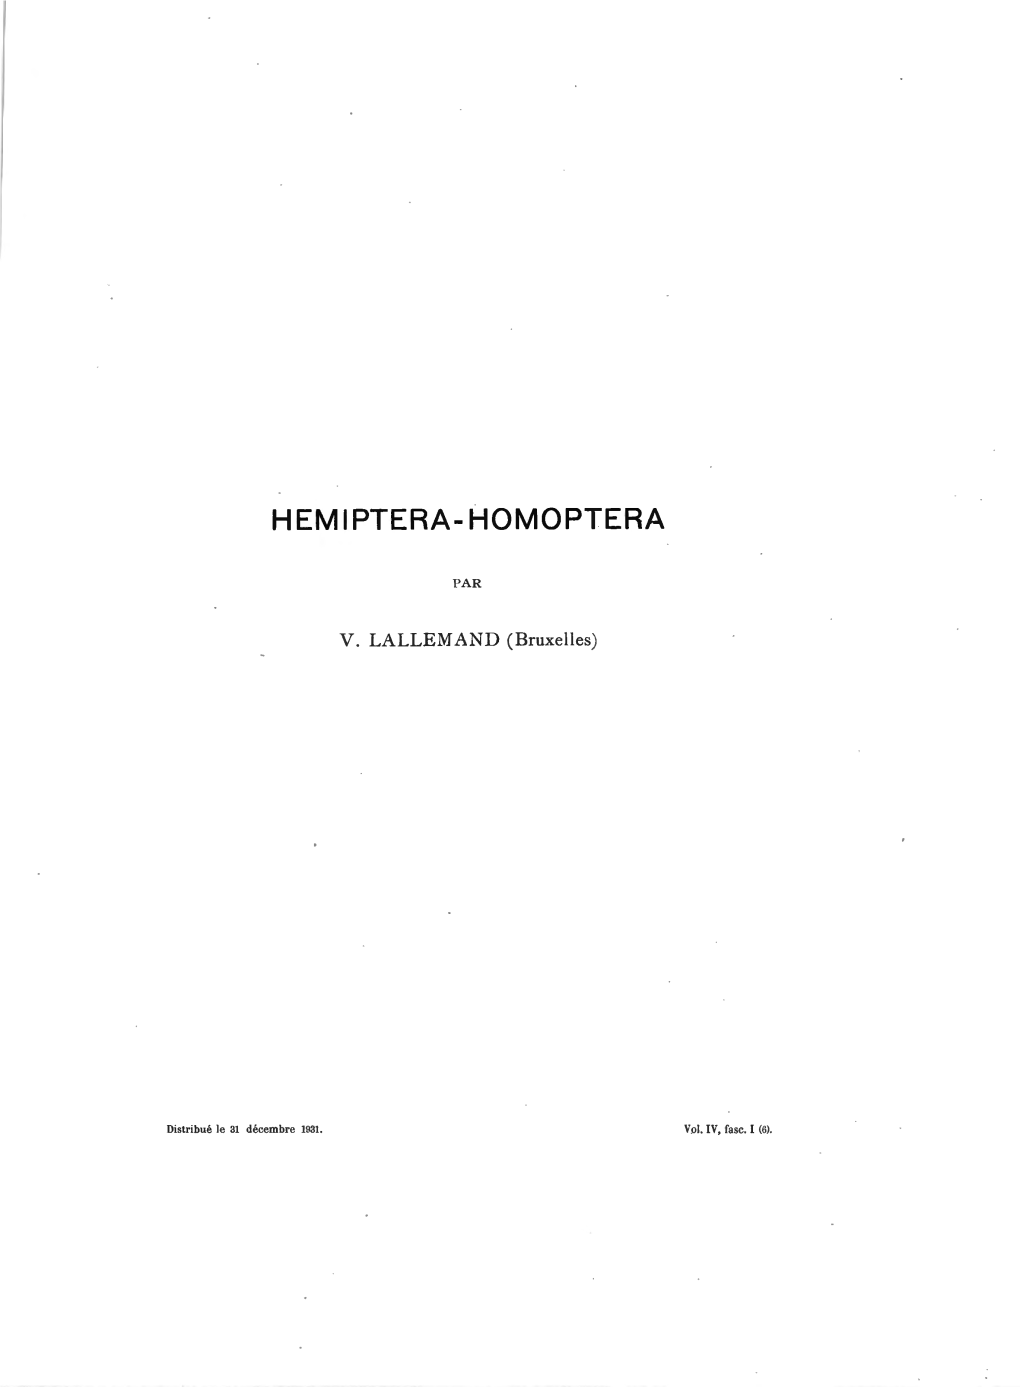 Hemiptera-Homoptera